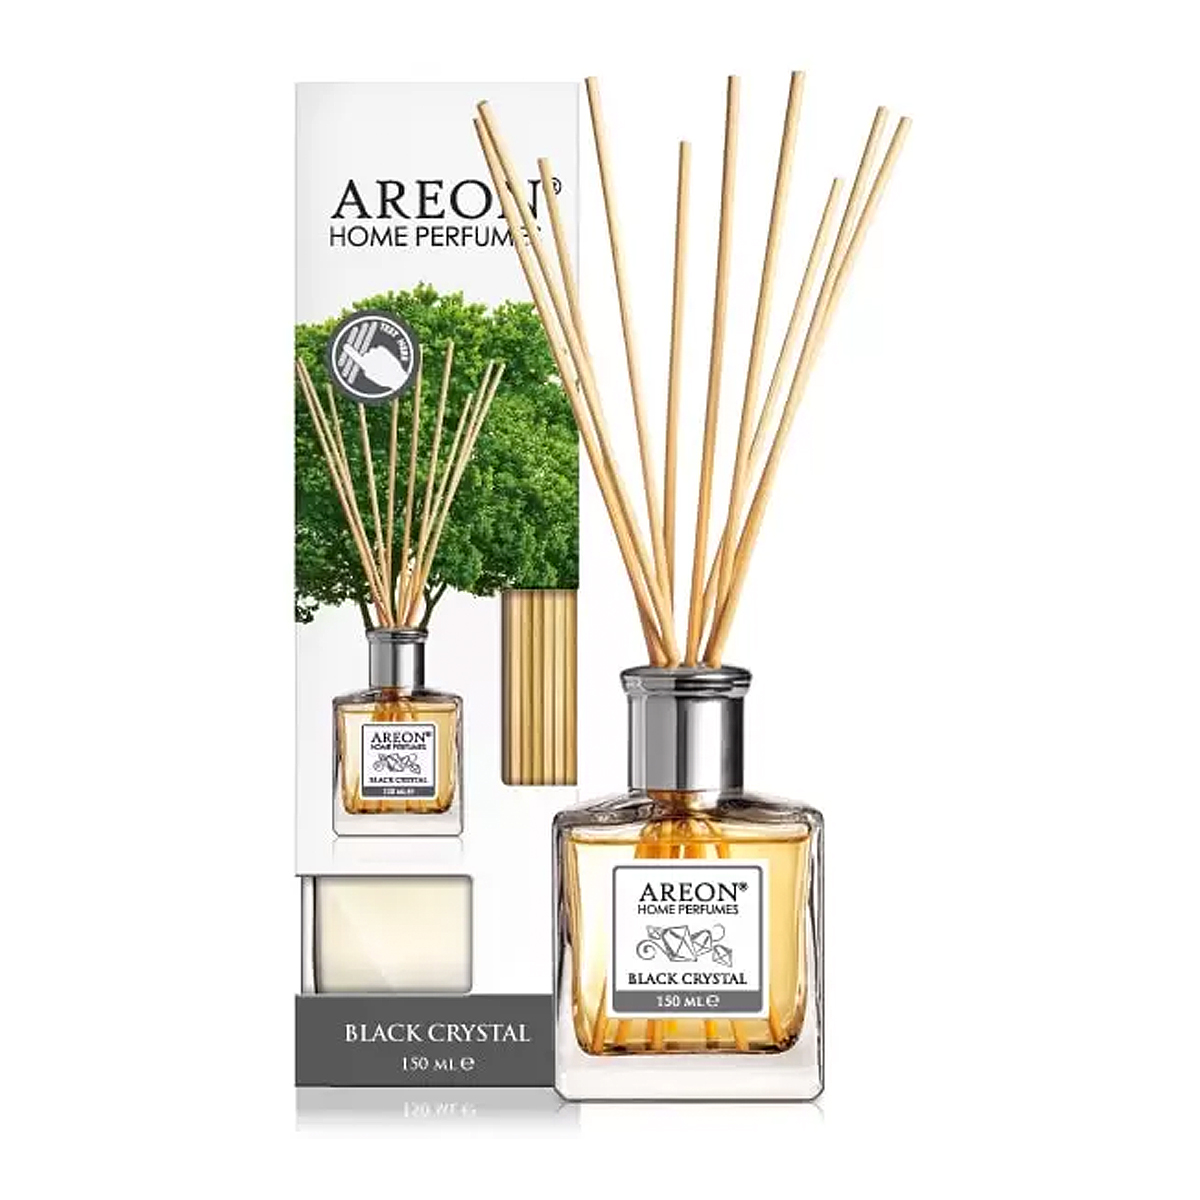 Areon Home Perfume 150ml Black Crystal - AmoMiAuto - Aromas y